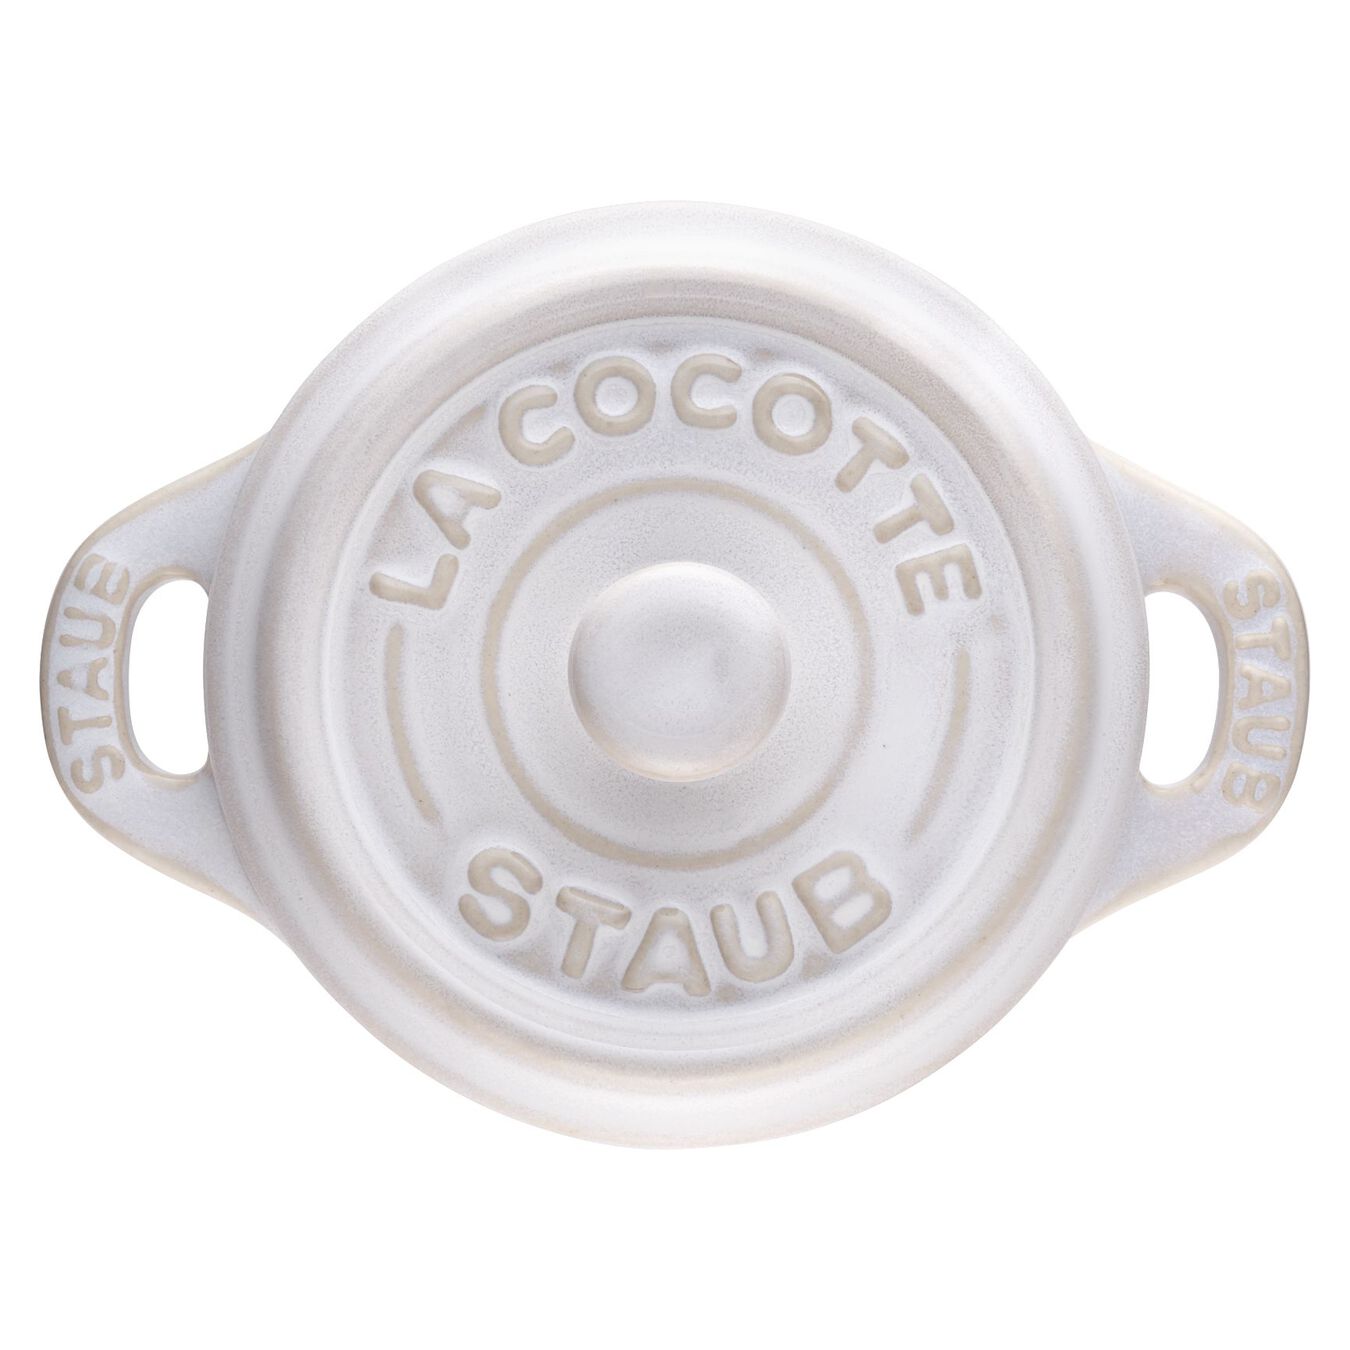 Mini cocotte 10 cm, redondo, Branco marfim, Cerâmica,,large 5